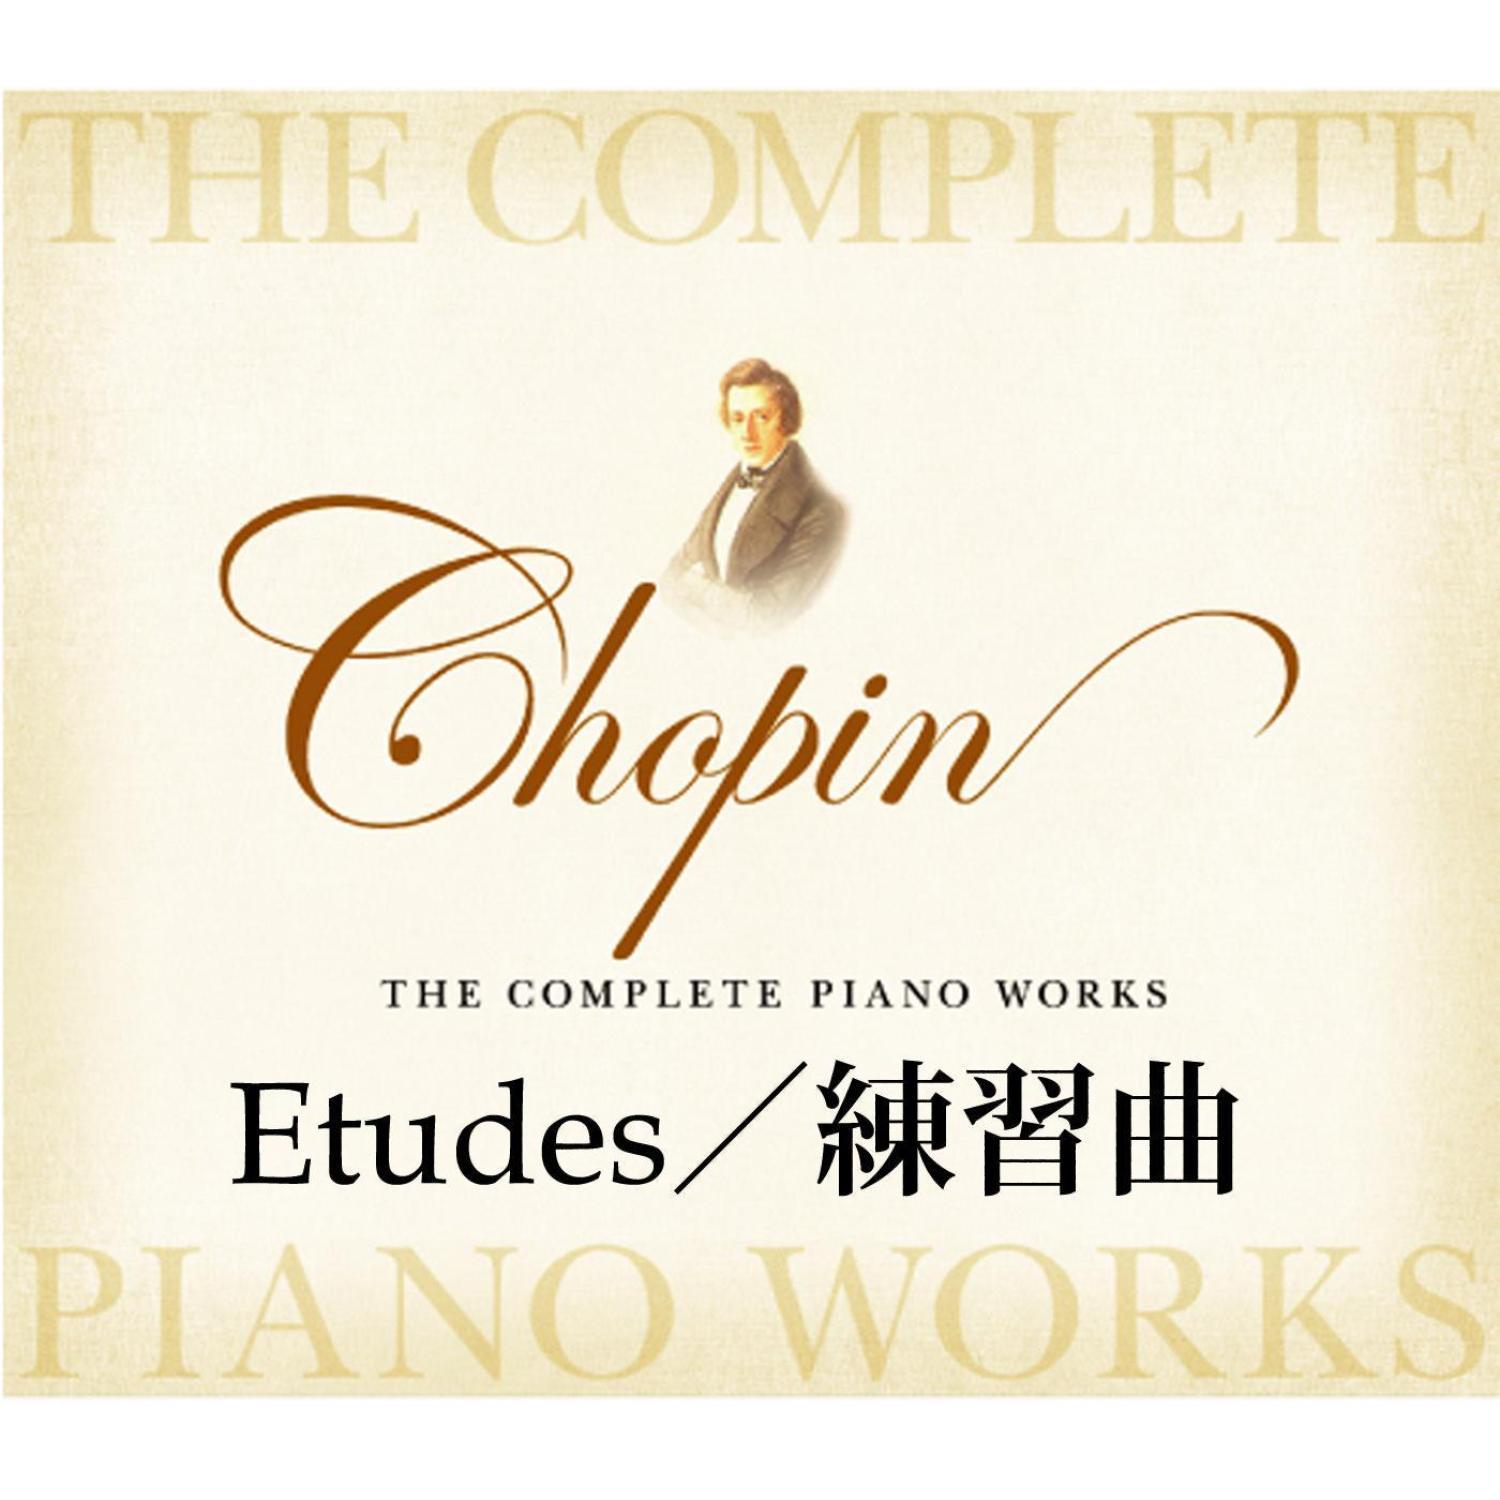 Chopin: Trois Nouvelles Etudes No.1 In F Minor Op.posth